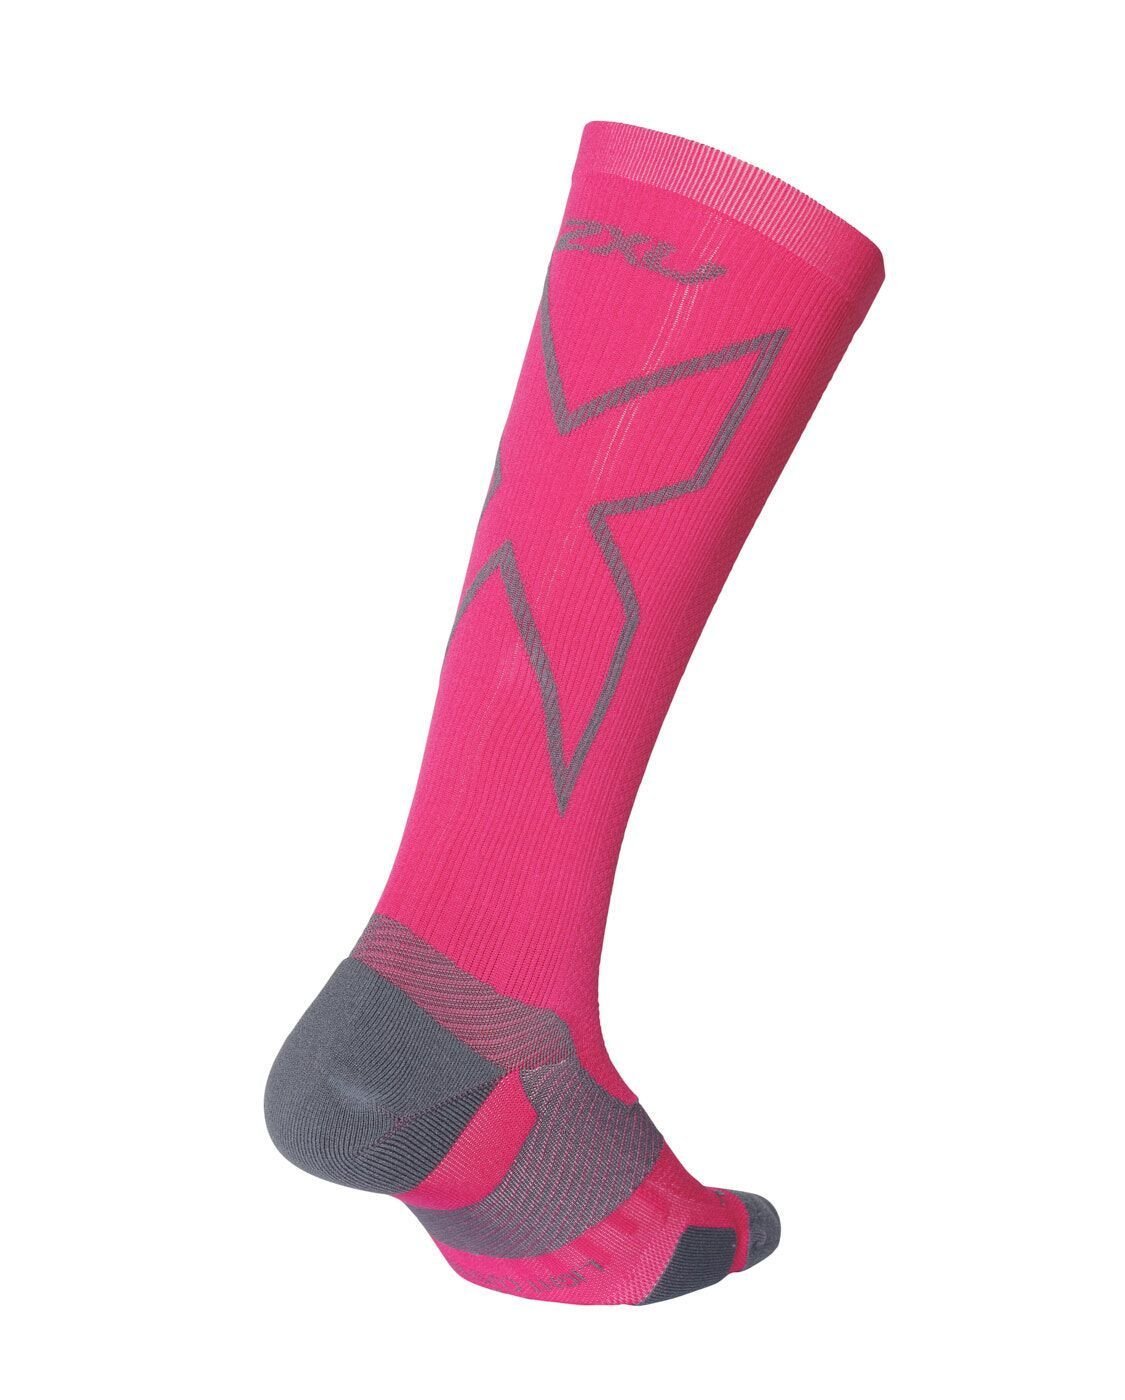 2XU South Africa - Vectr Light Cushion Full Length Socks - Hot Pink/Grey